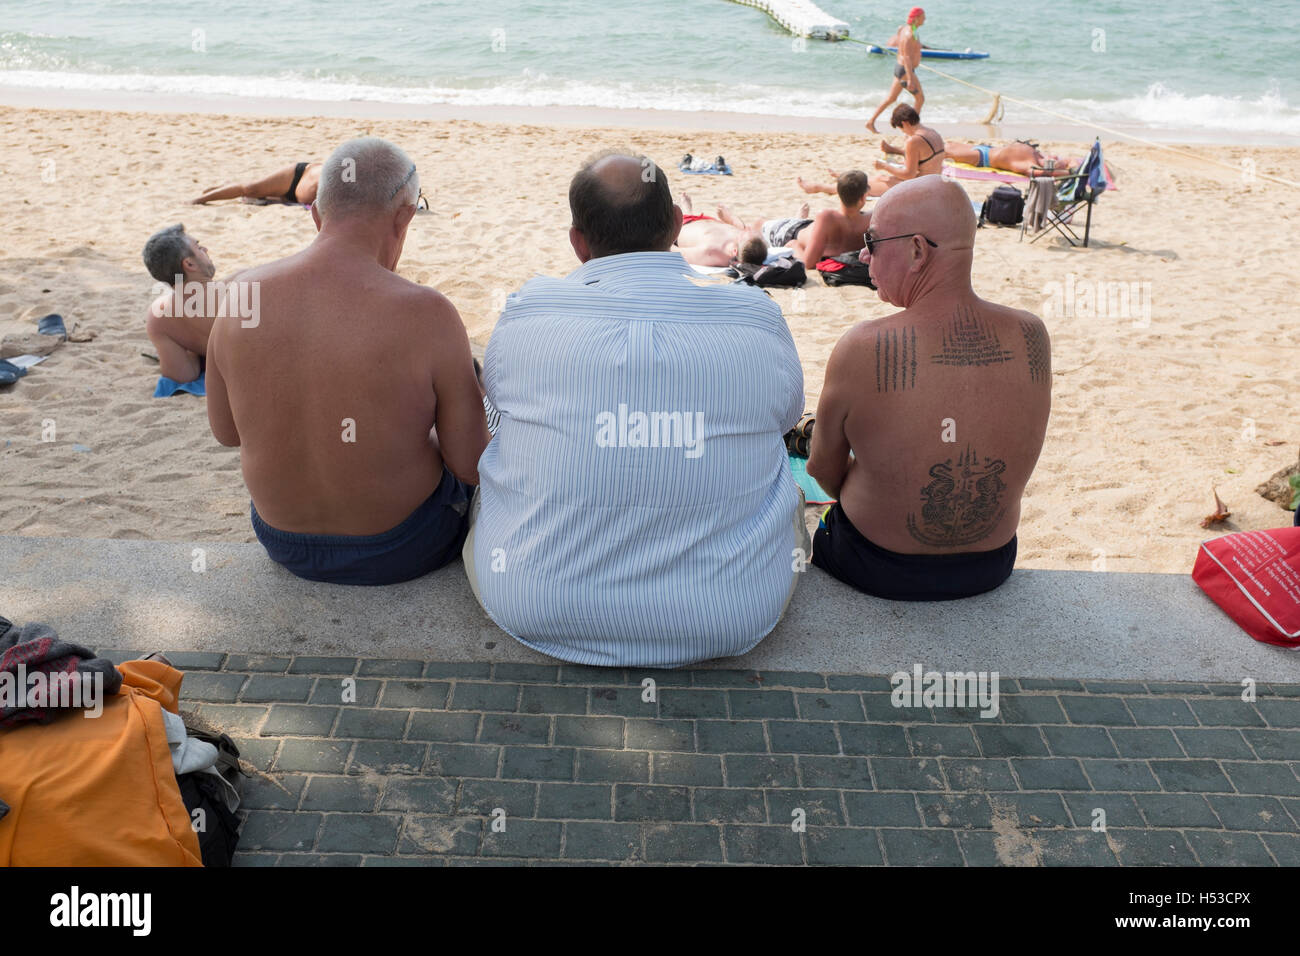 Overweight Man on the beach in Pattaya Thailand Stock Photo